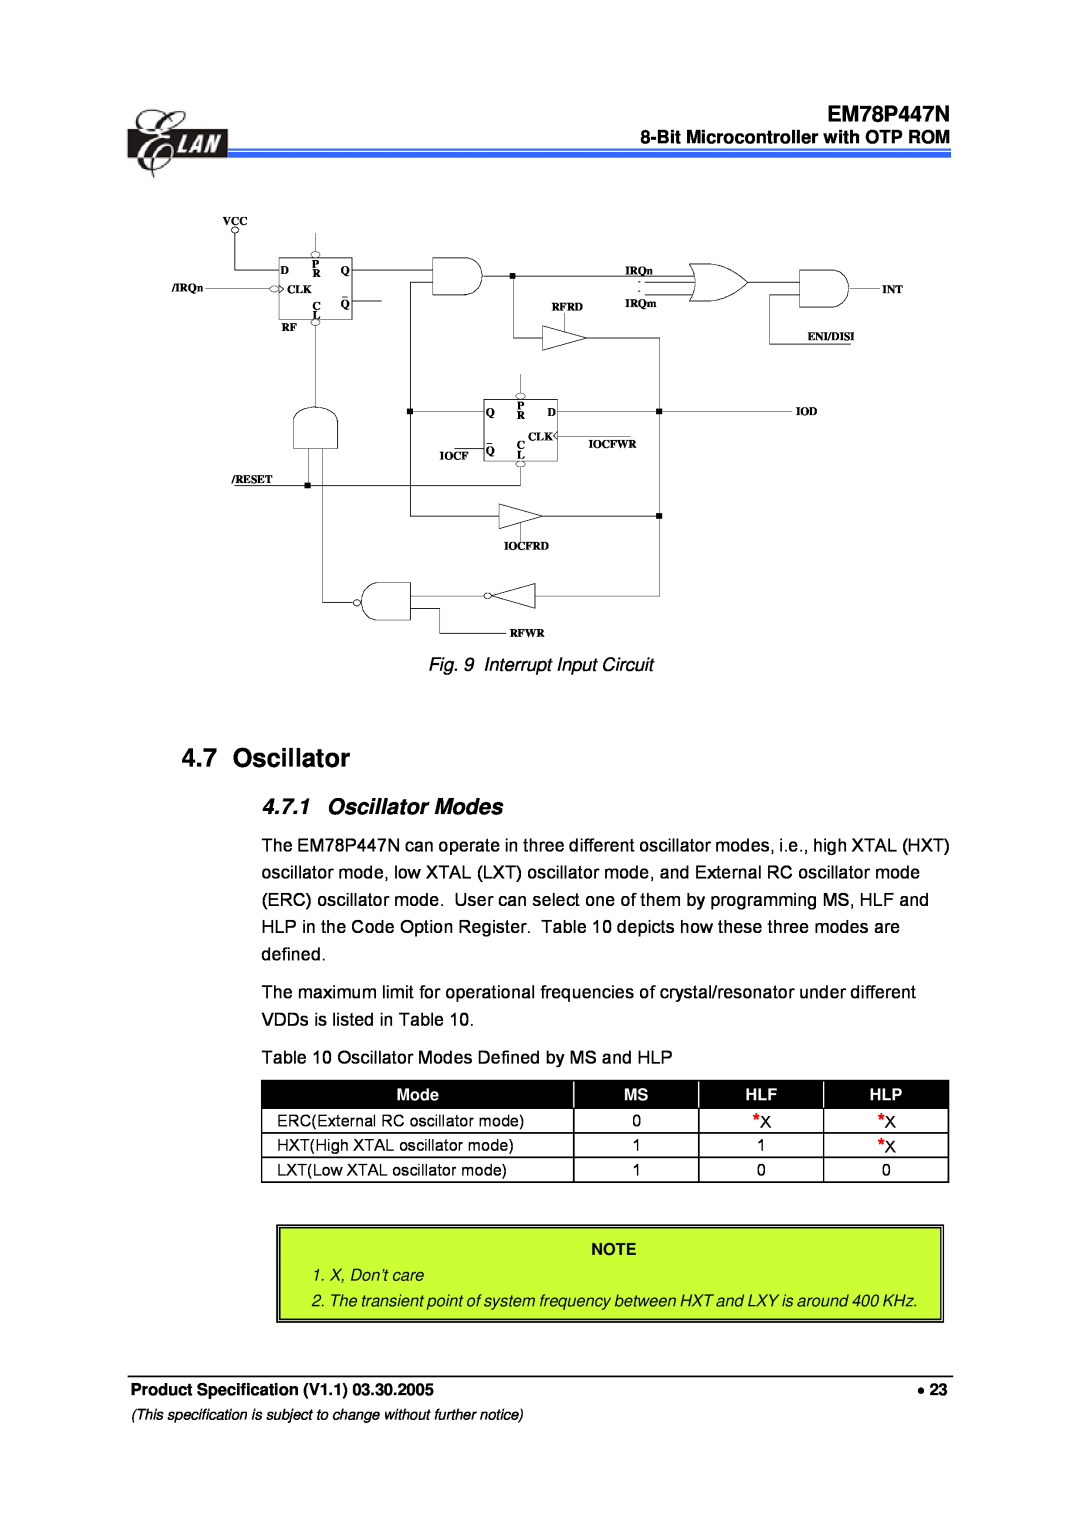 IBM EM78P447N manual Oscillator Modes, Interrupt Input Circuit 